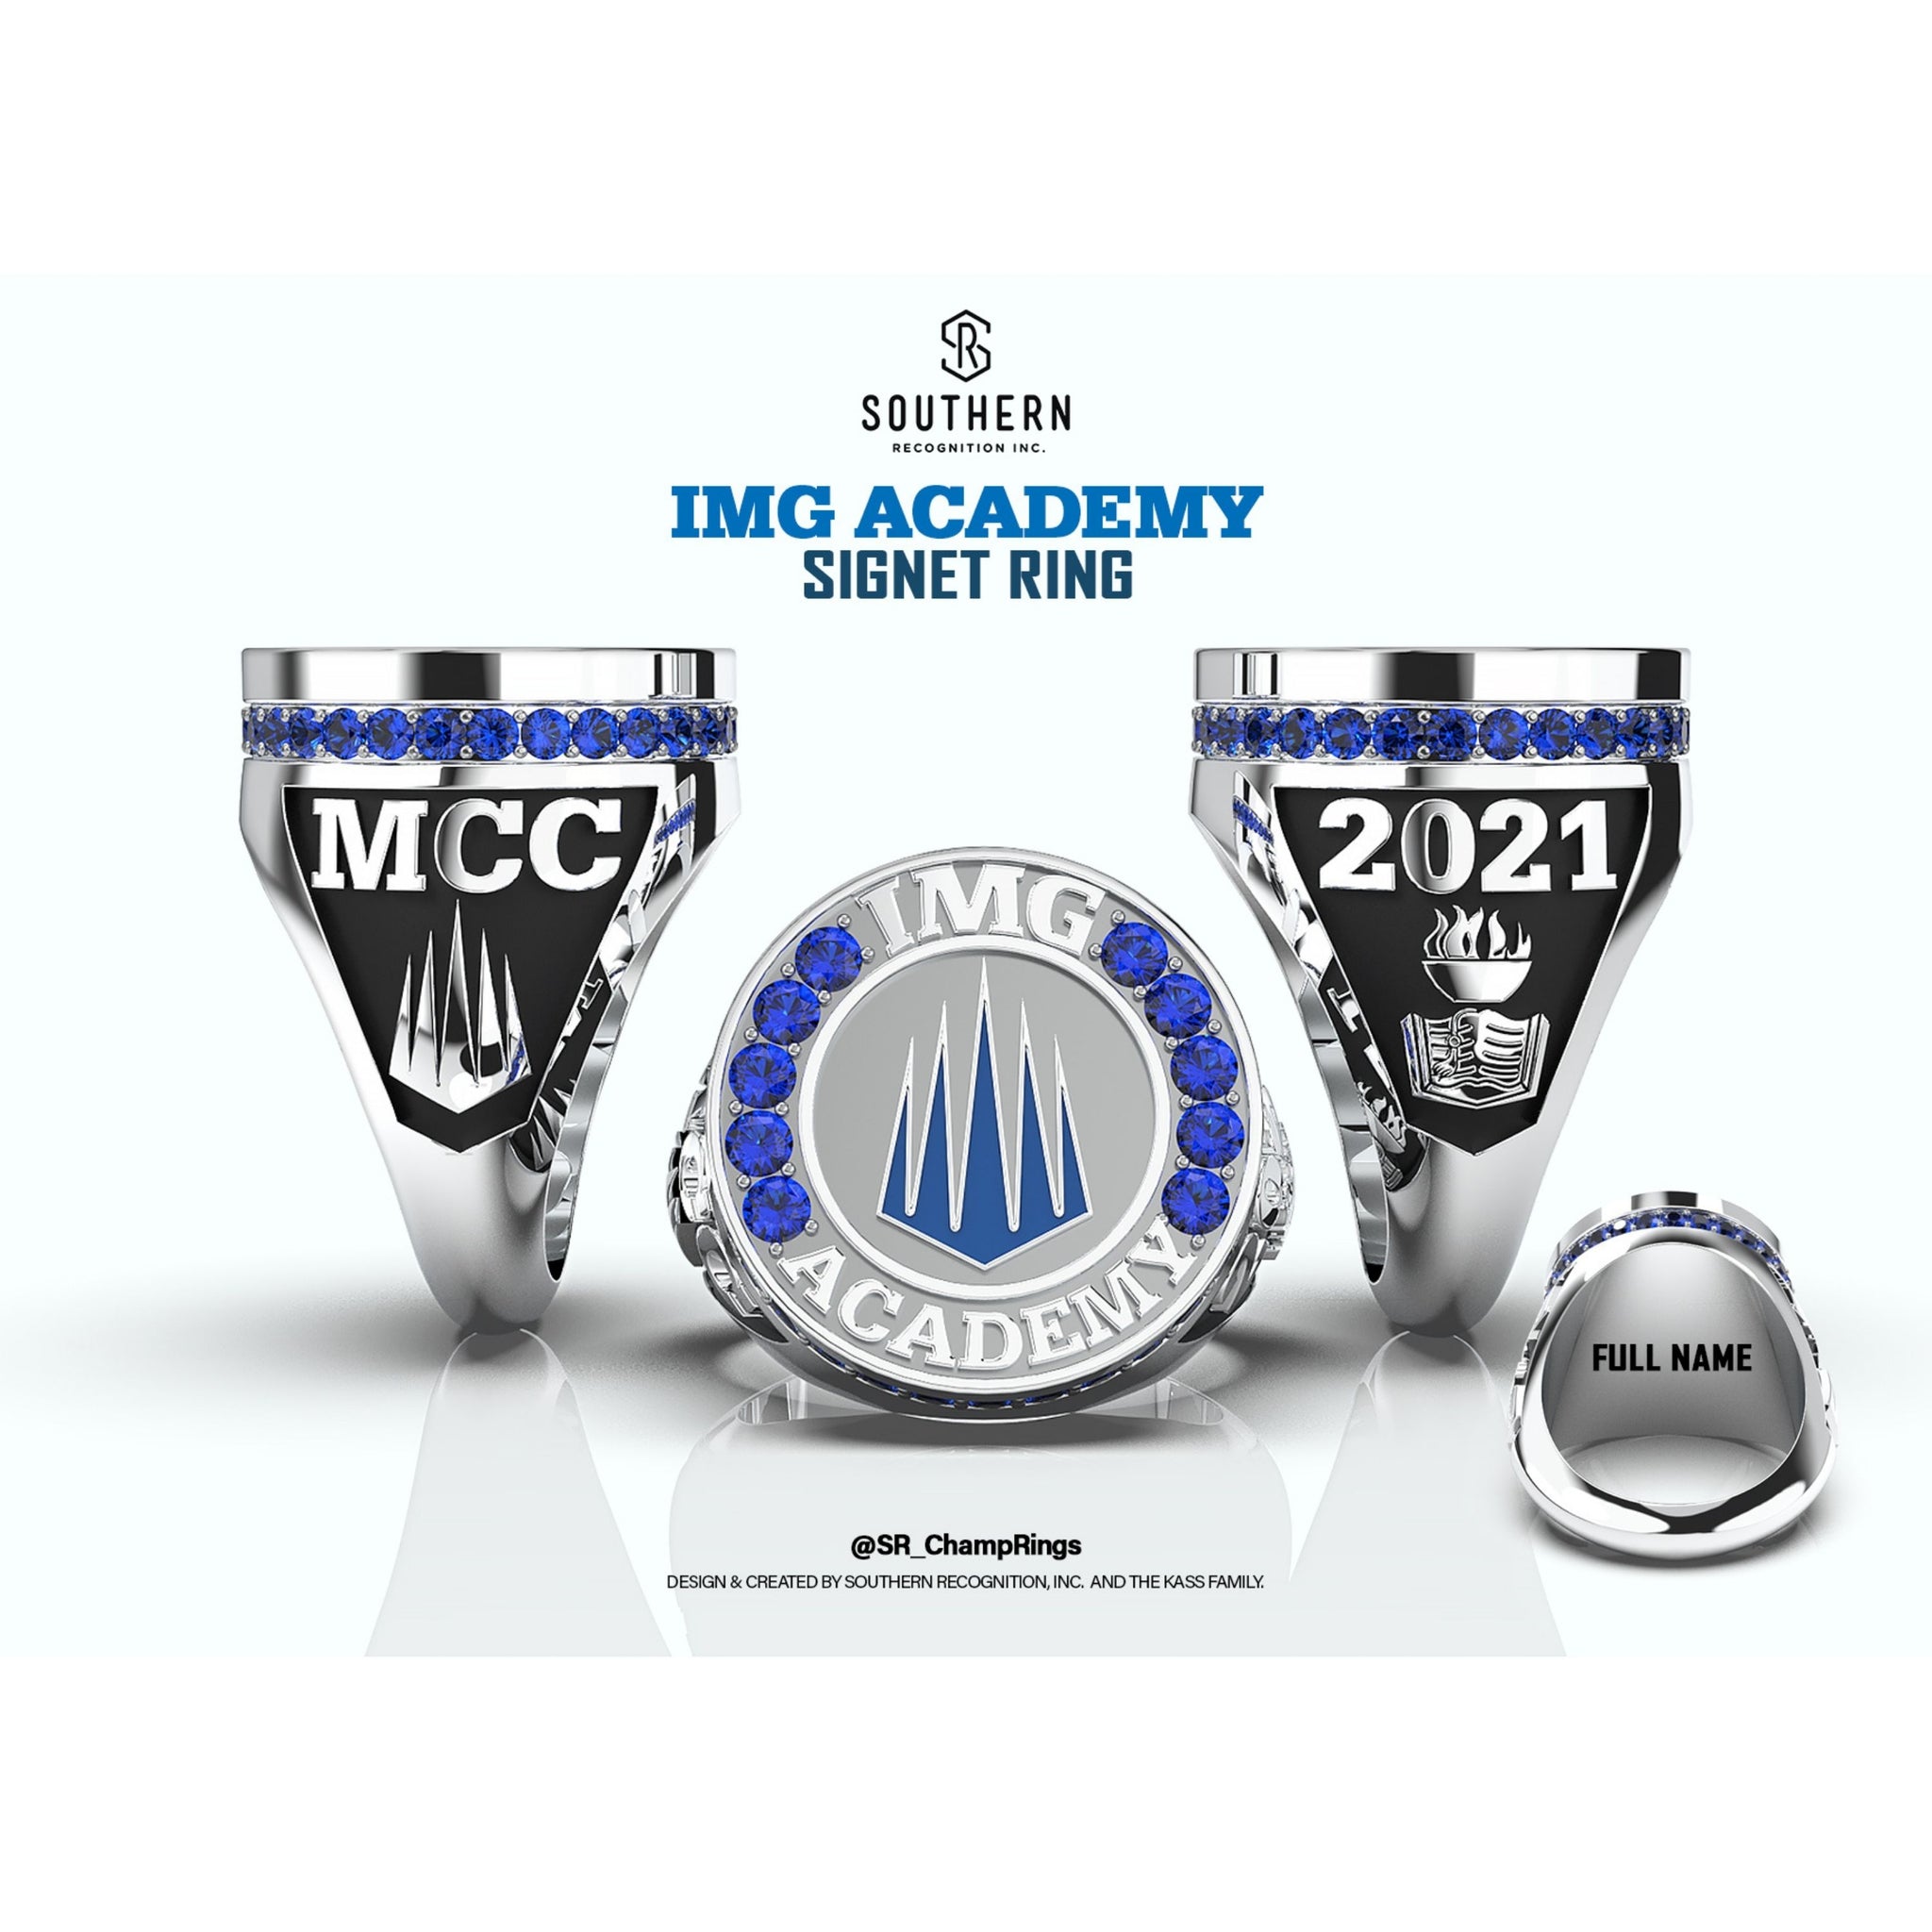 IMG Academy Signet Ring